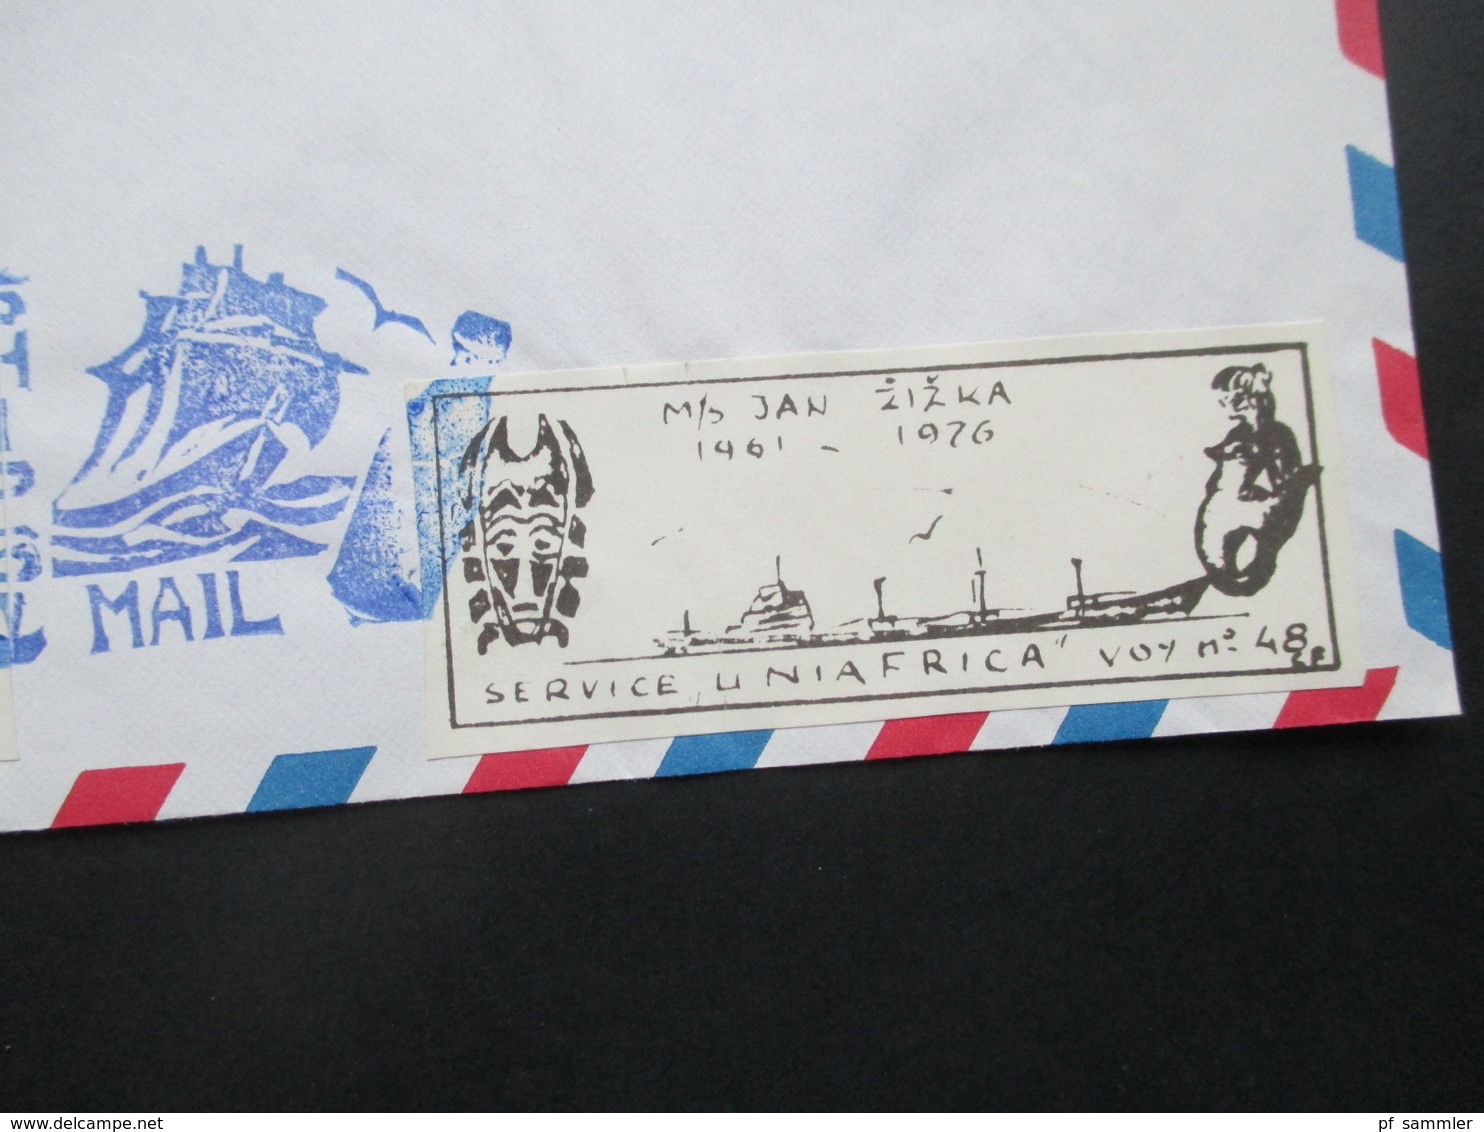 Afrika 1976 Ship Mail / Letter 2 Vignetten / Aufkleber MS Jan Zizka 1961 - 76 West Africa Line Voyage 1948 - Schiffe